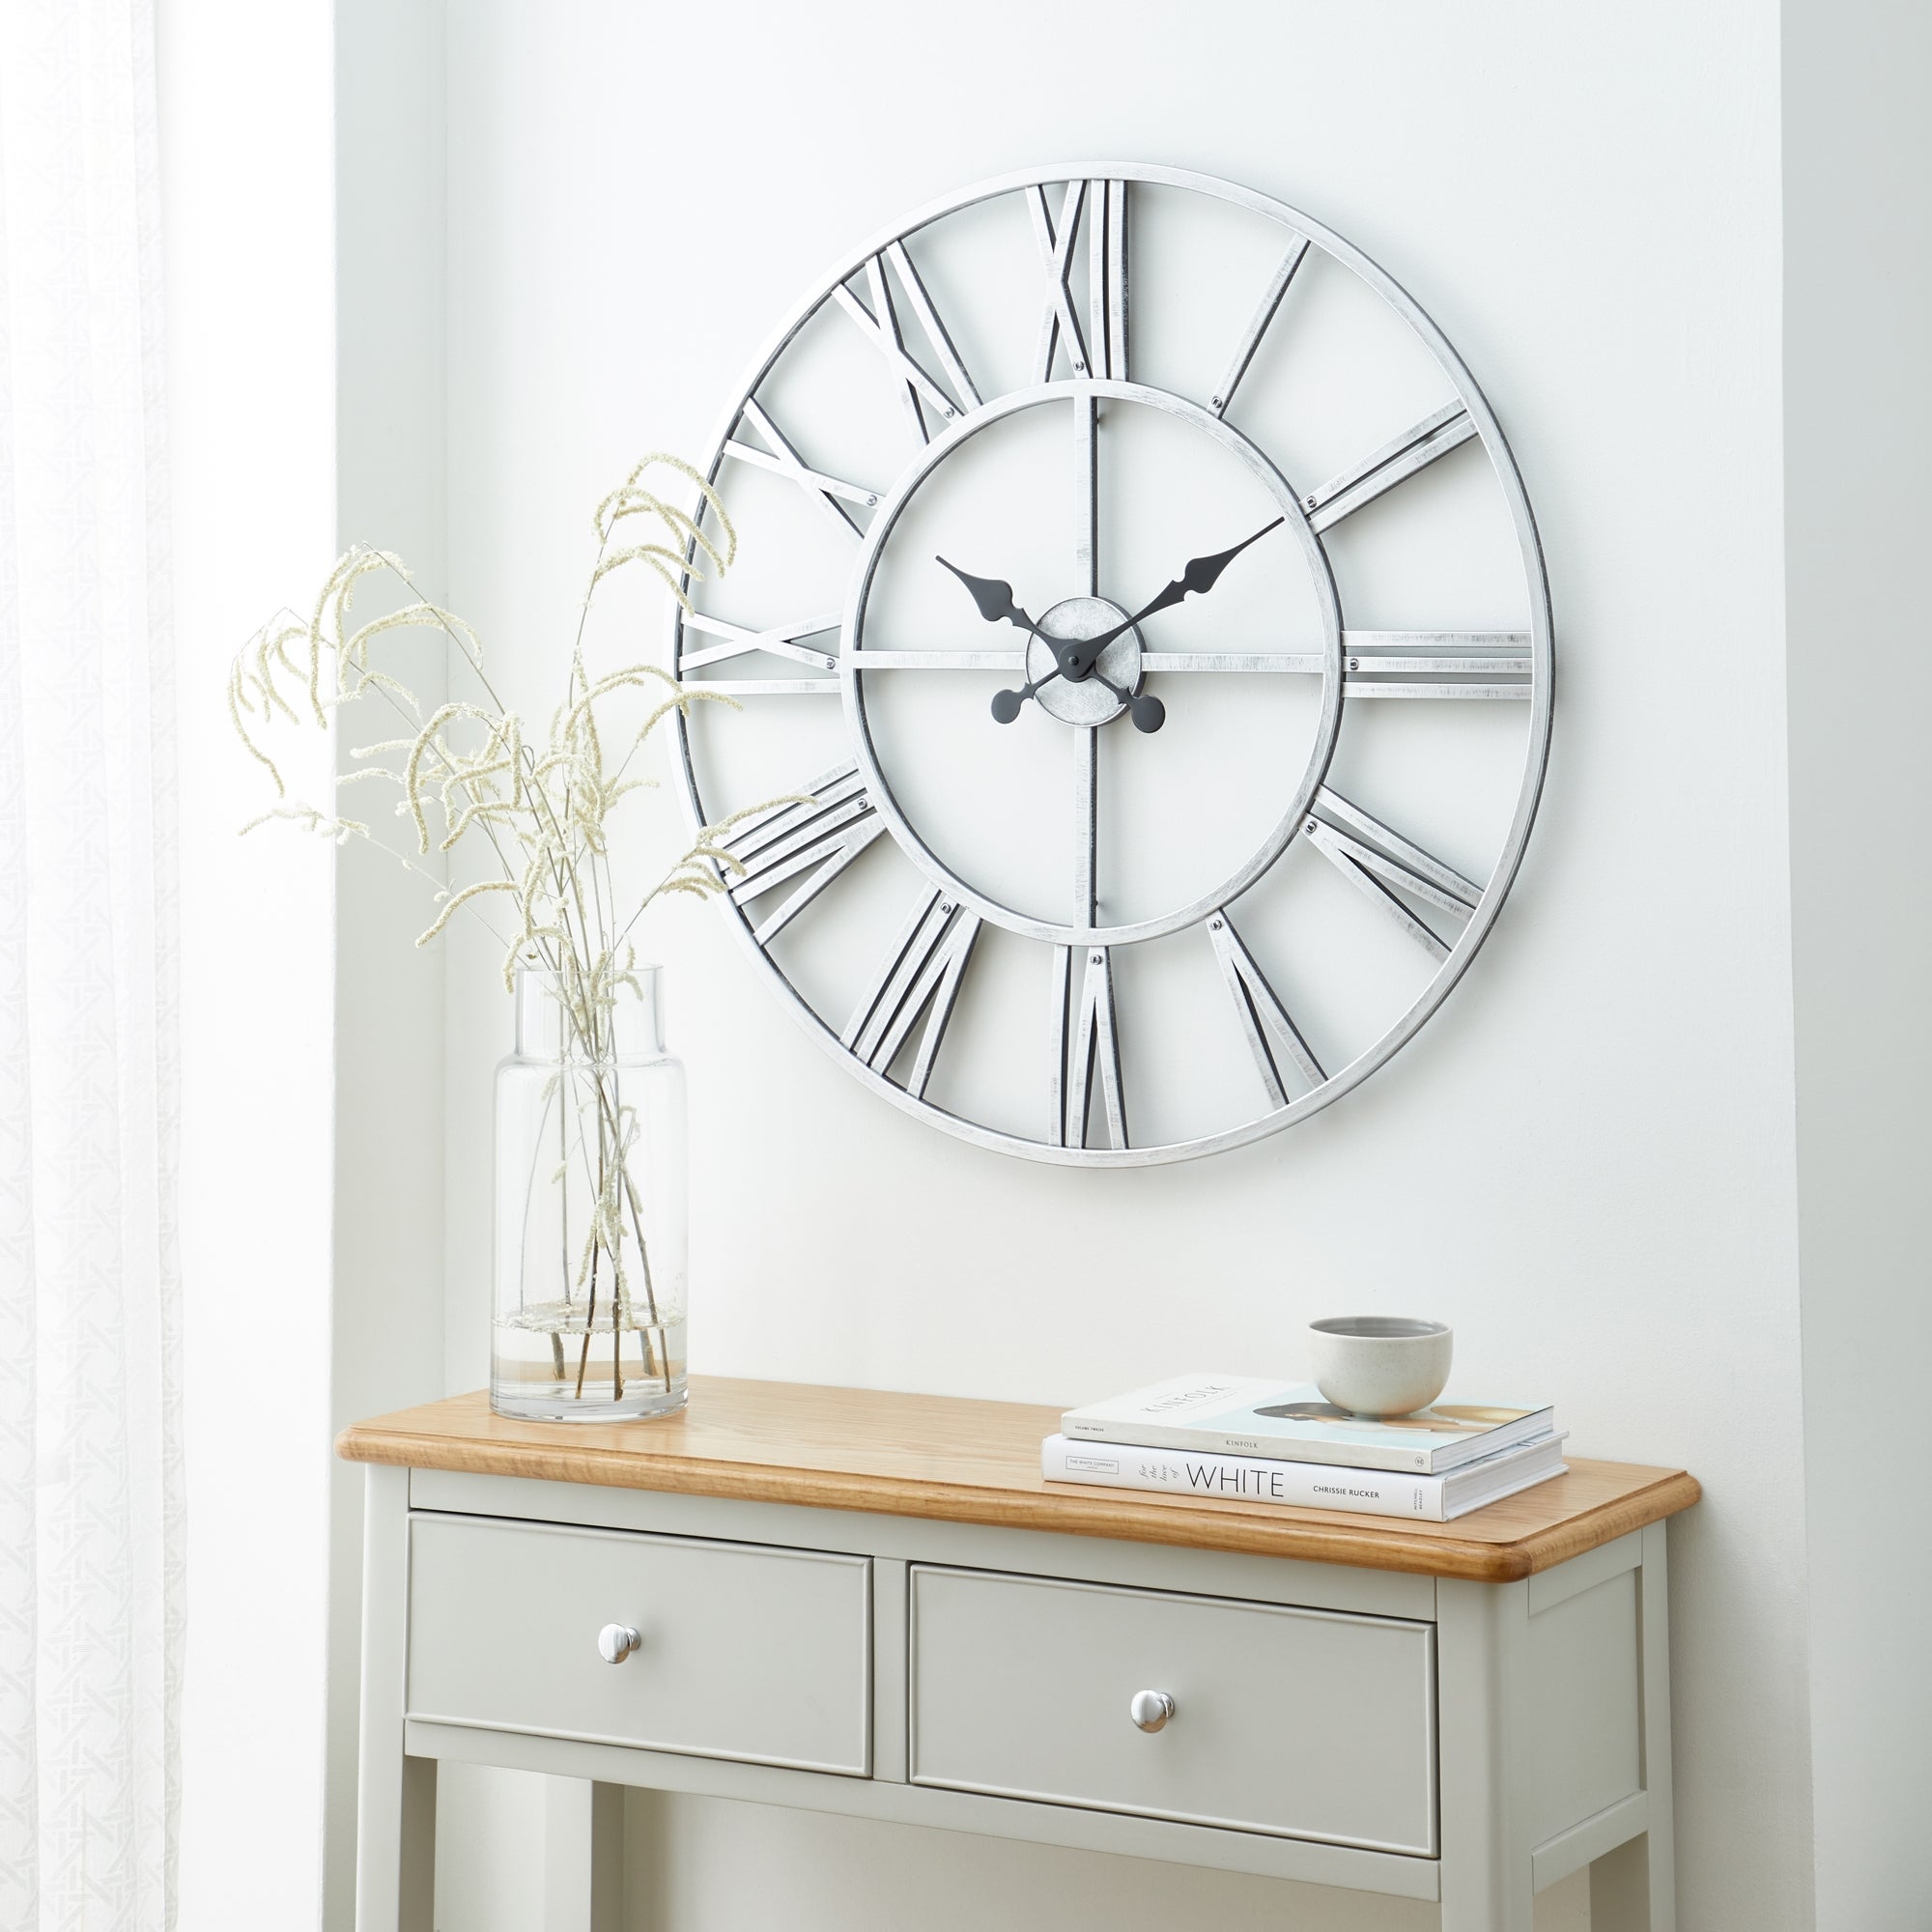 JONES CLOCKS® The Mustard Wall Clock - Analog Wall Clock - Retro Clock -  Kitchen Wall Clocks - Easy to Read Dial - Square Wall Clock - British  Design